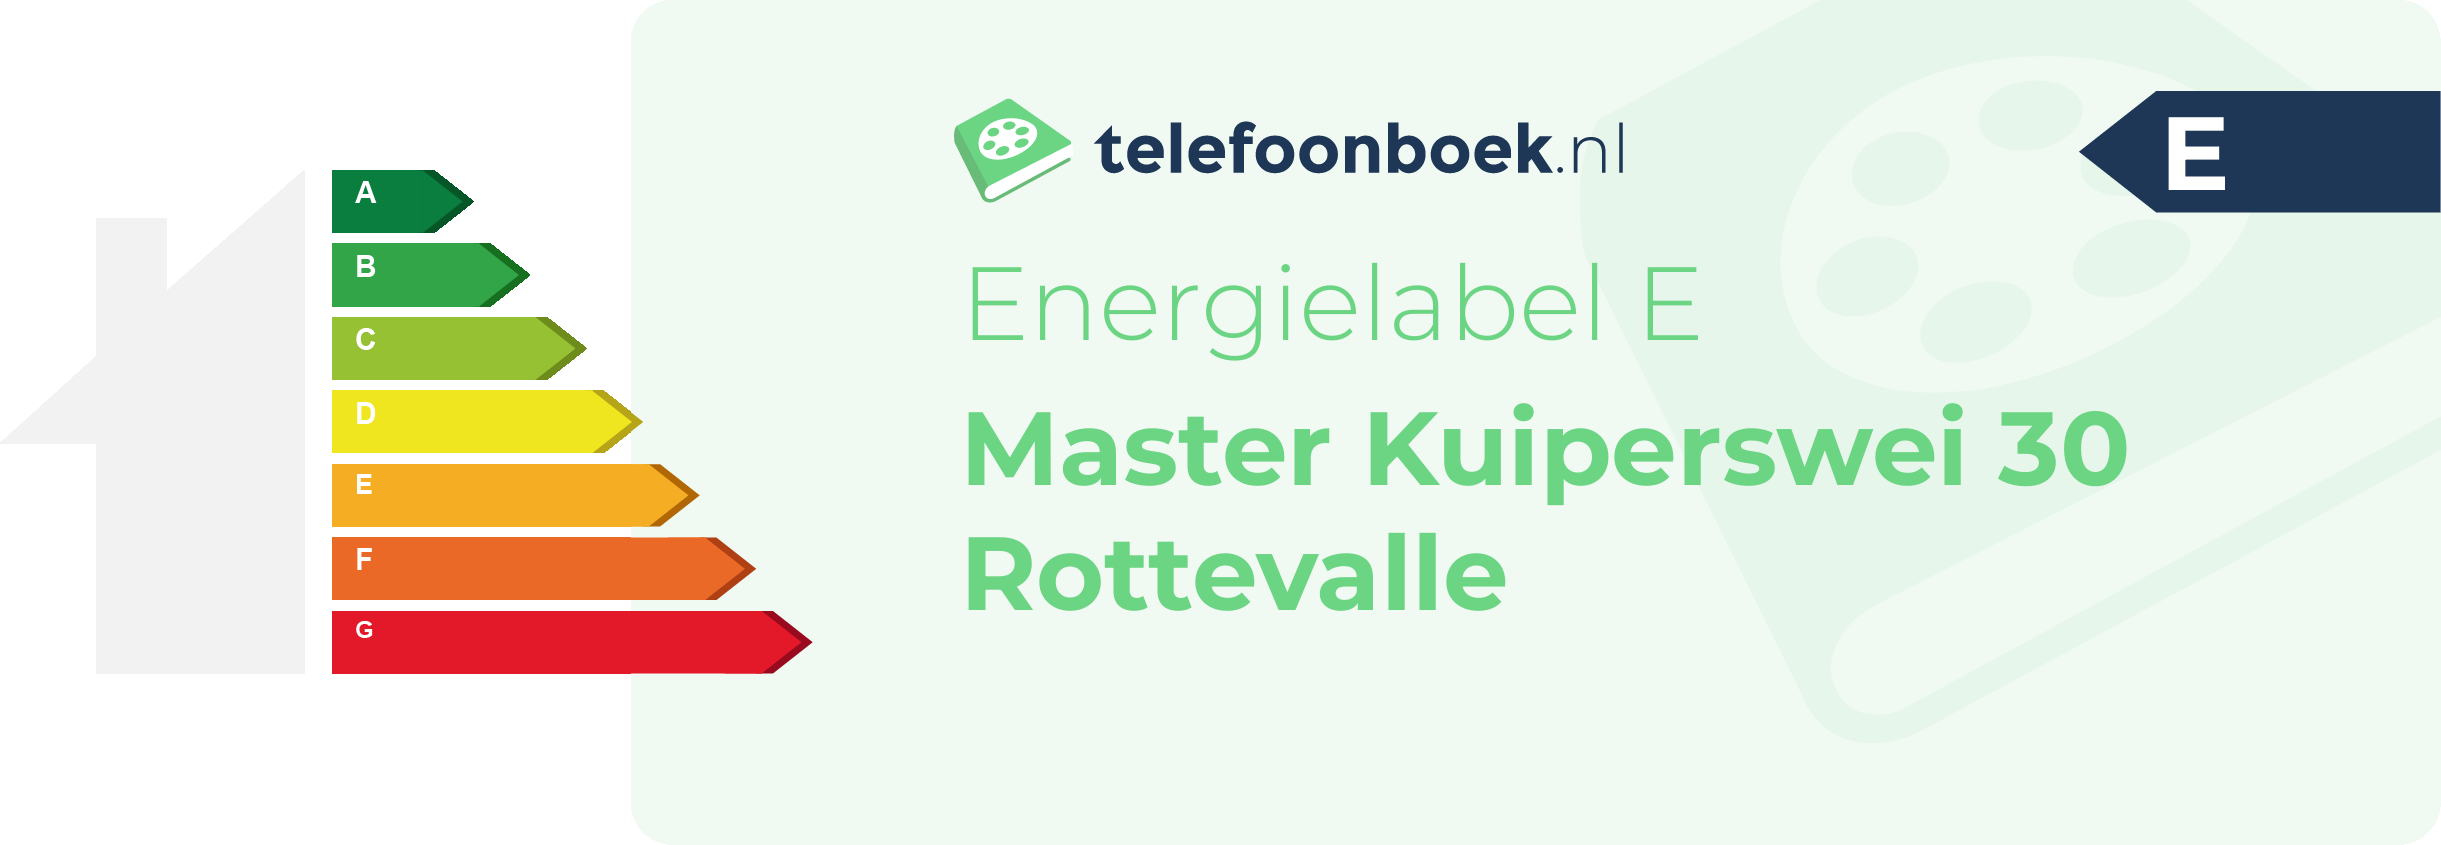 Energielabel Master Kuiperswei 30 Rottevalle